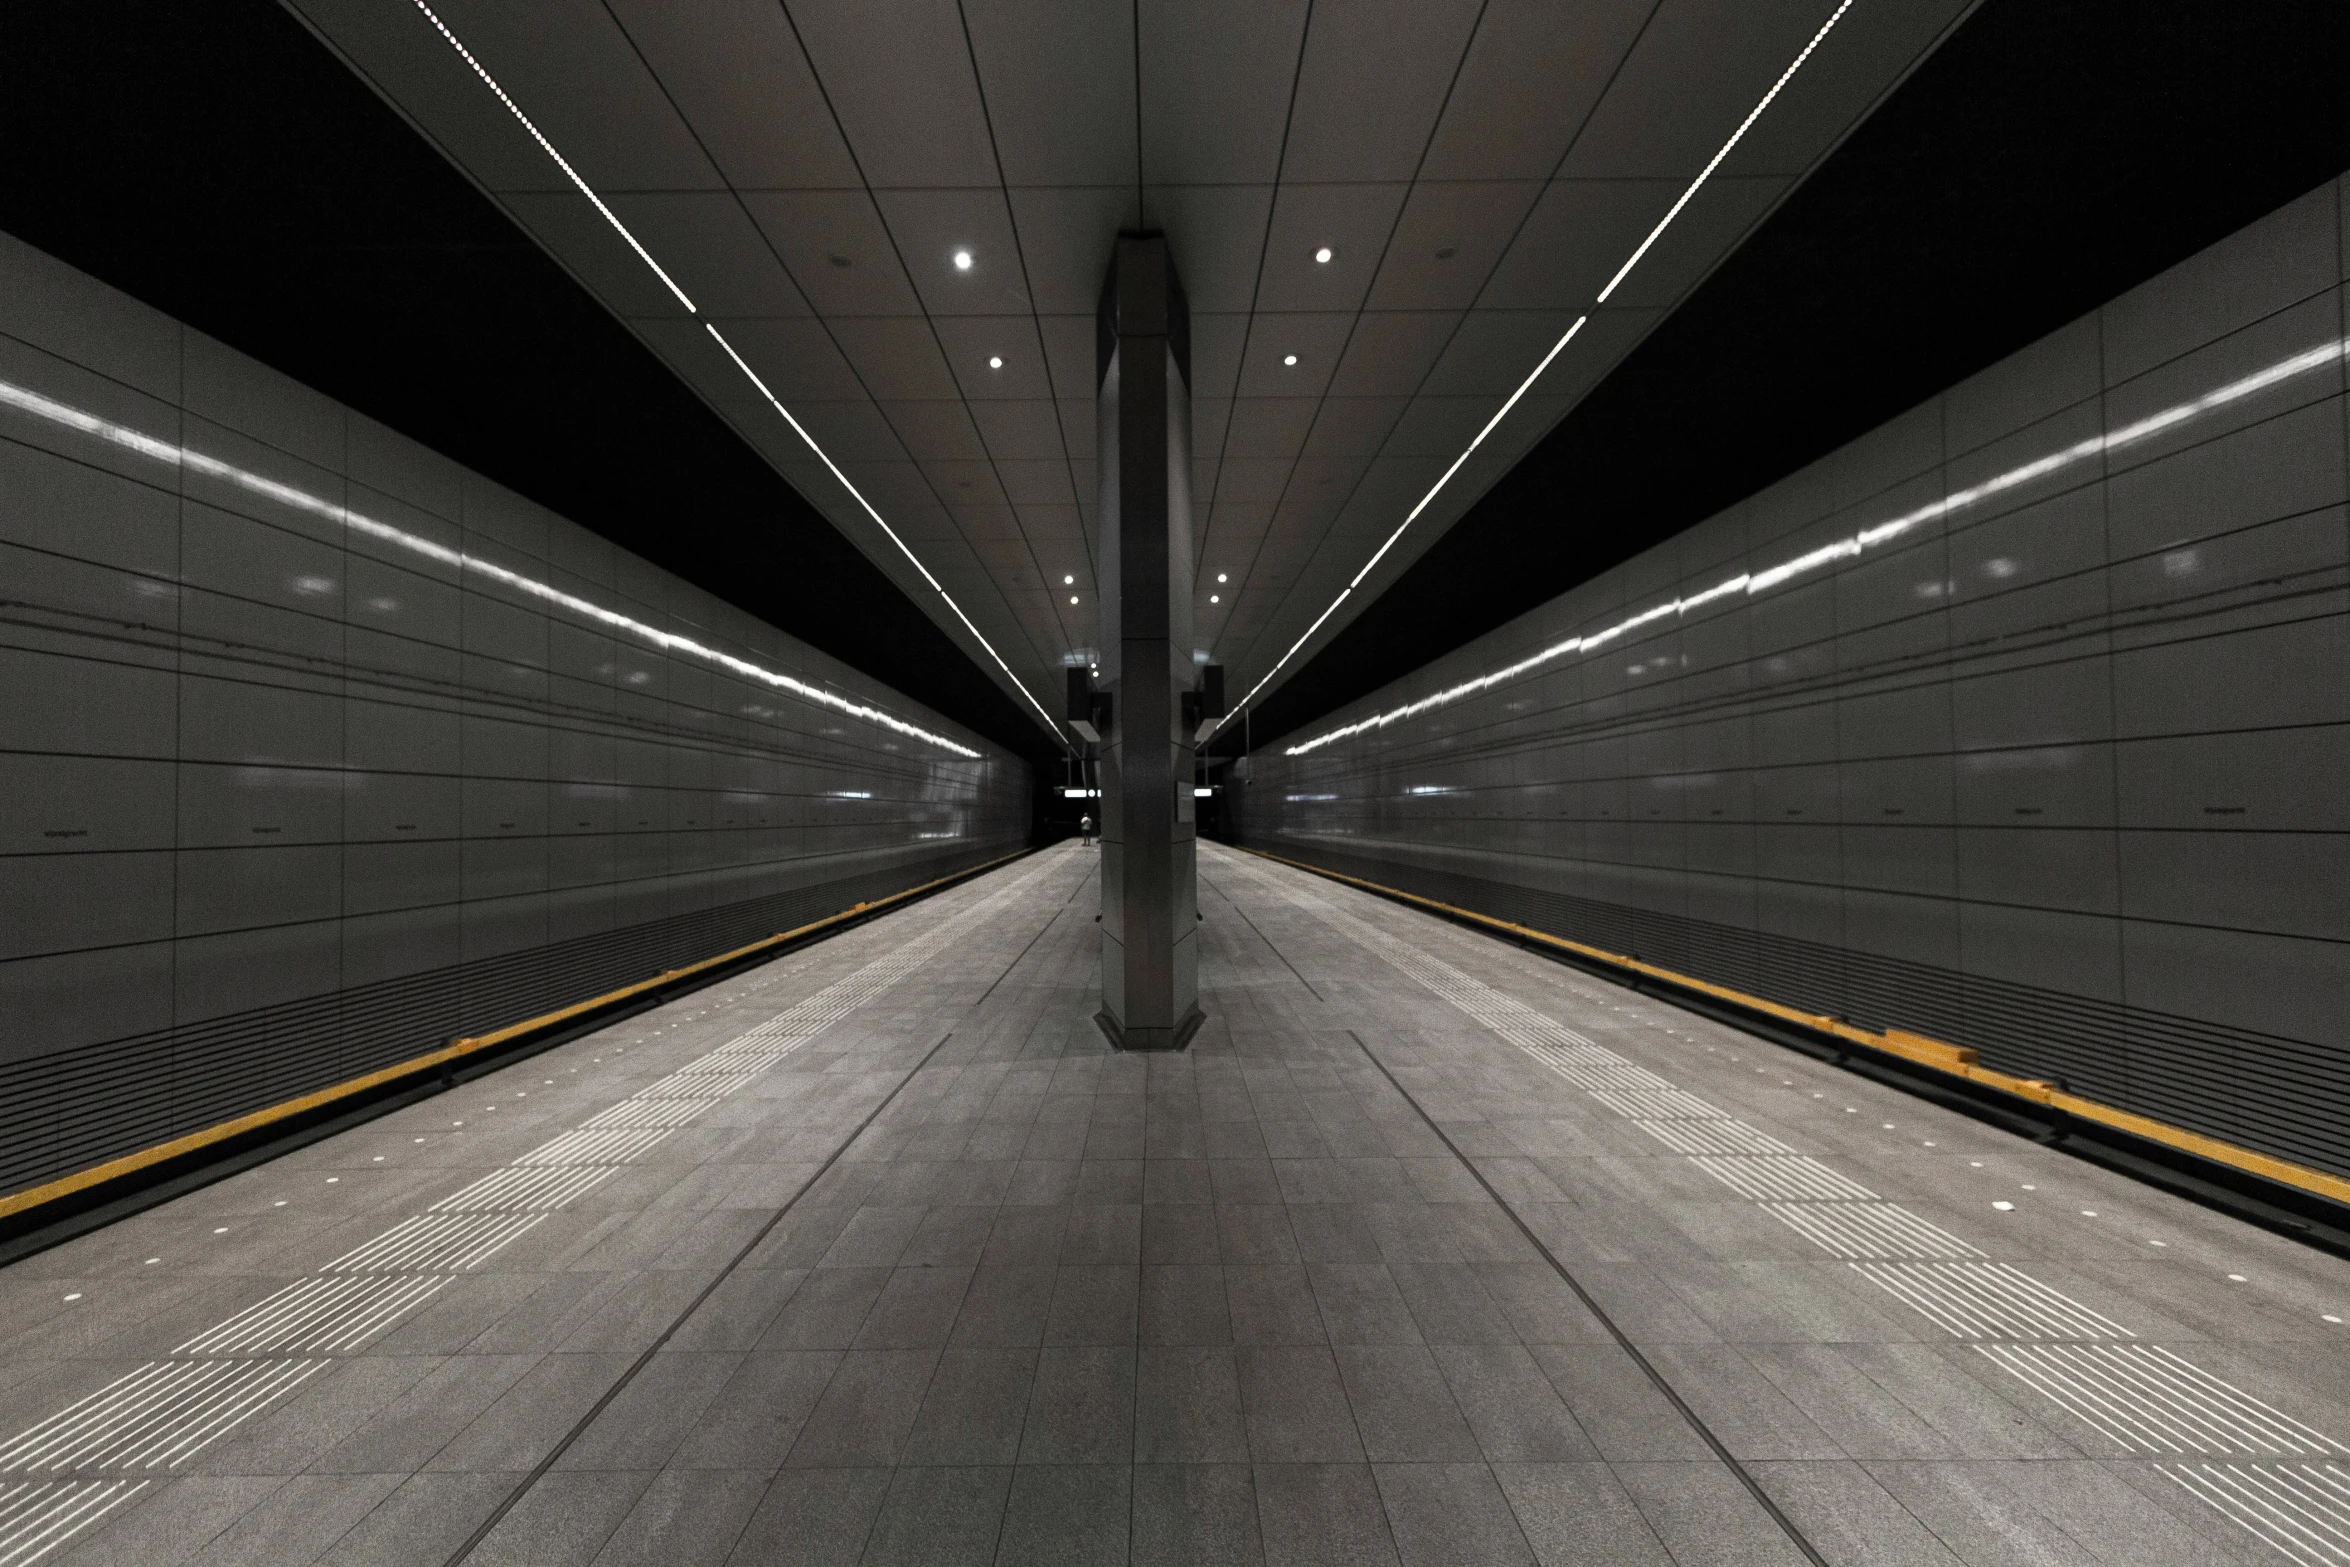 an artistic pograph of a subway train platform